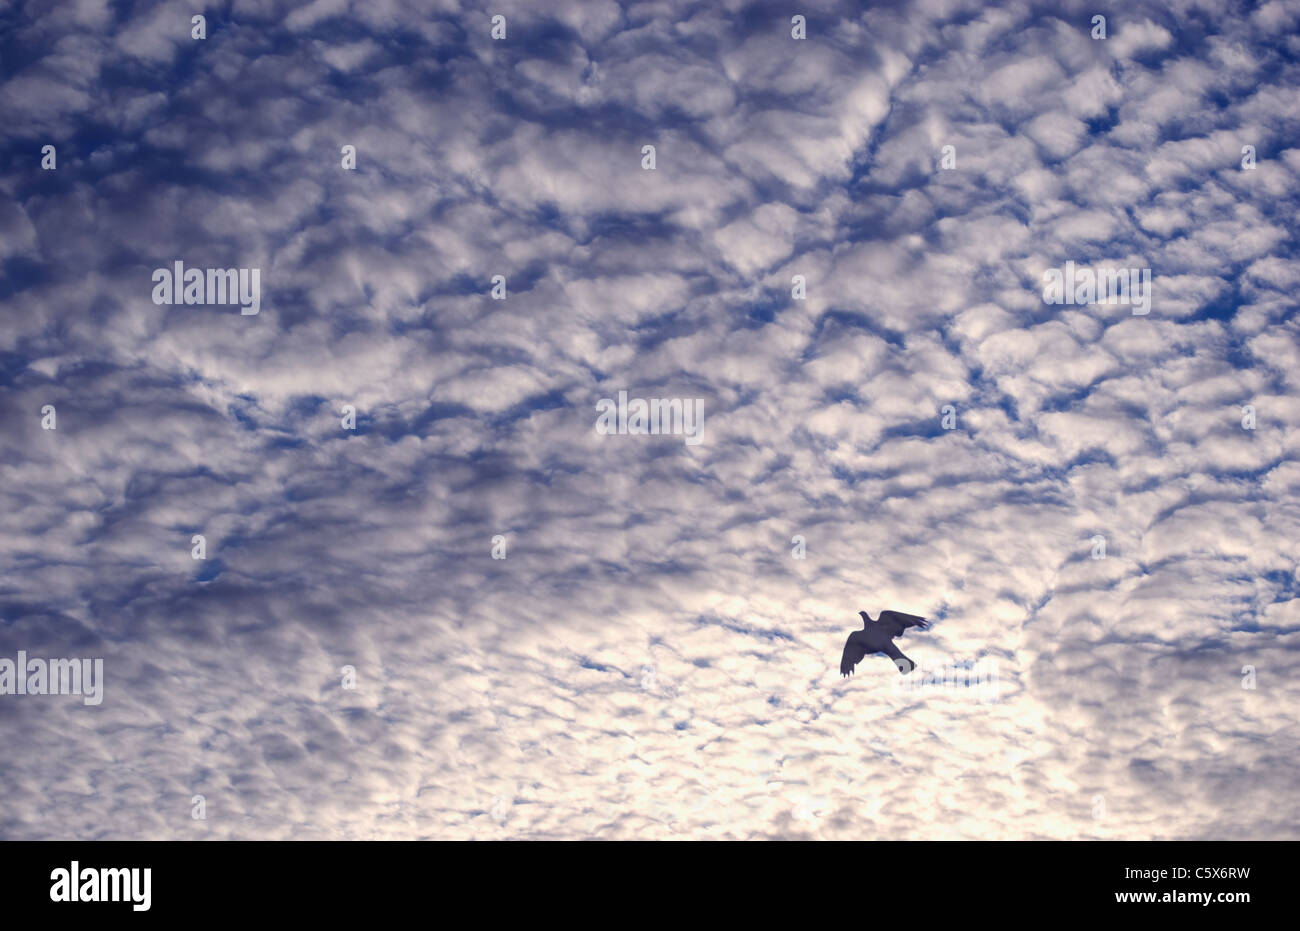 Bird flying in dramatic sky Stock Photo